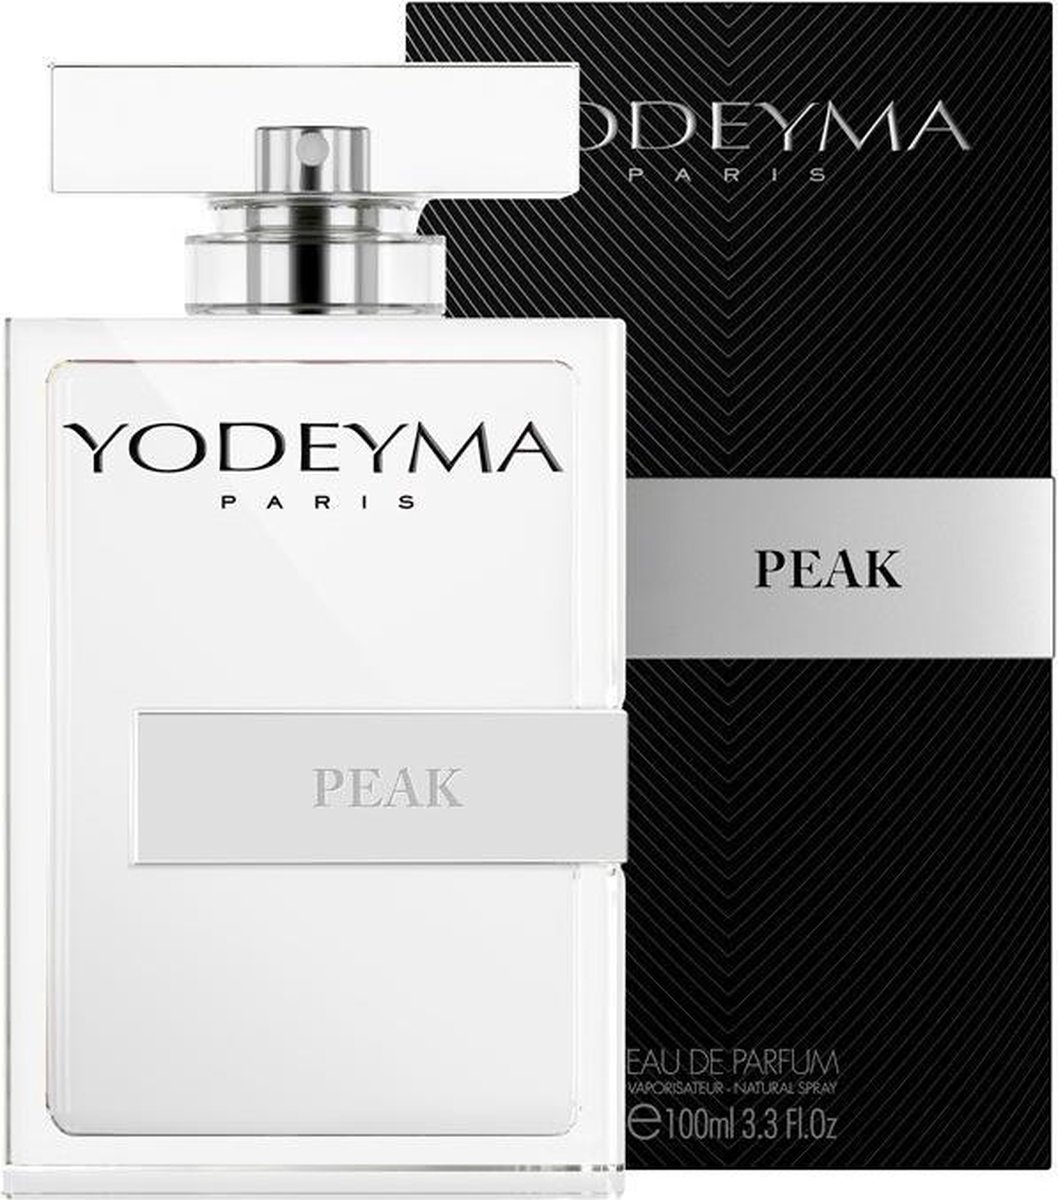 Yodeyma Peak 15 ml